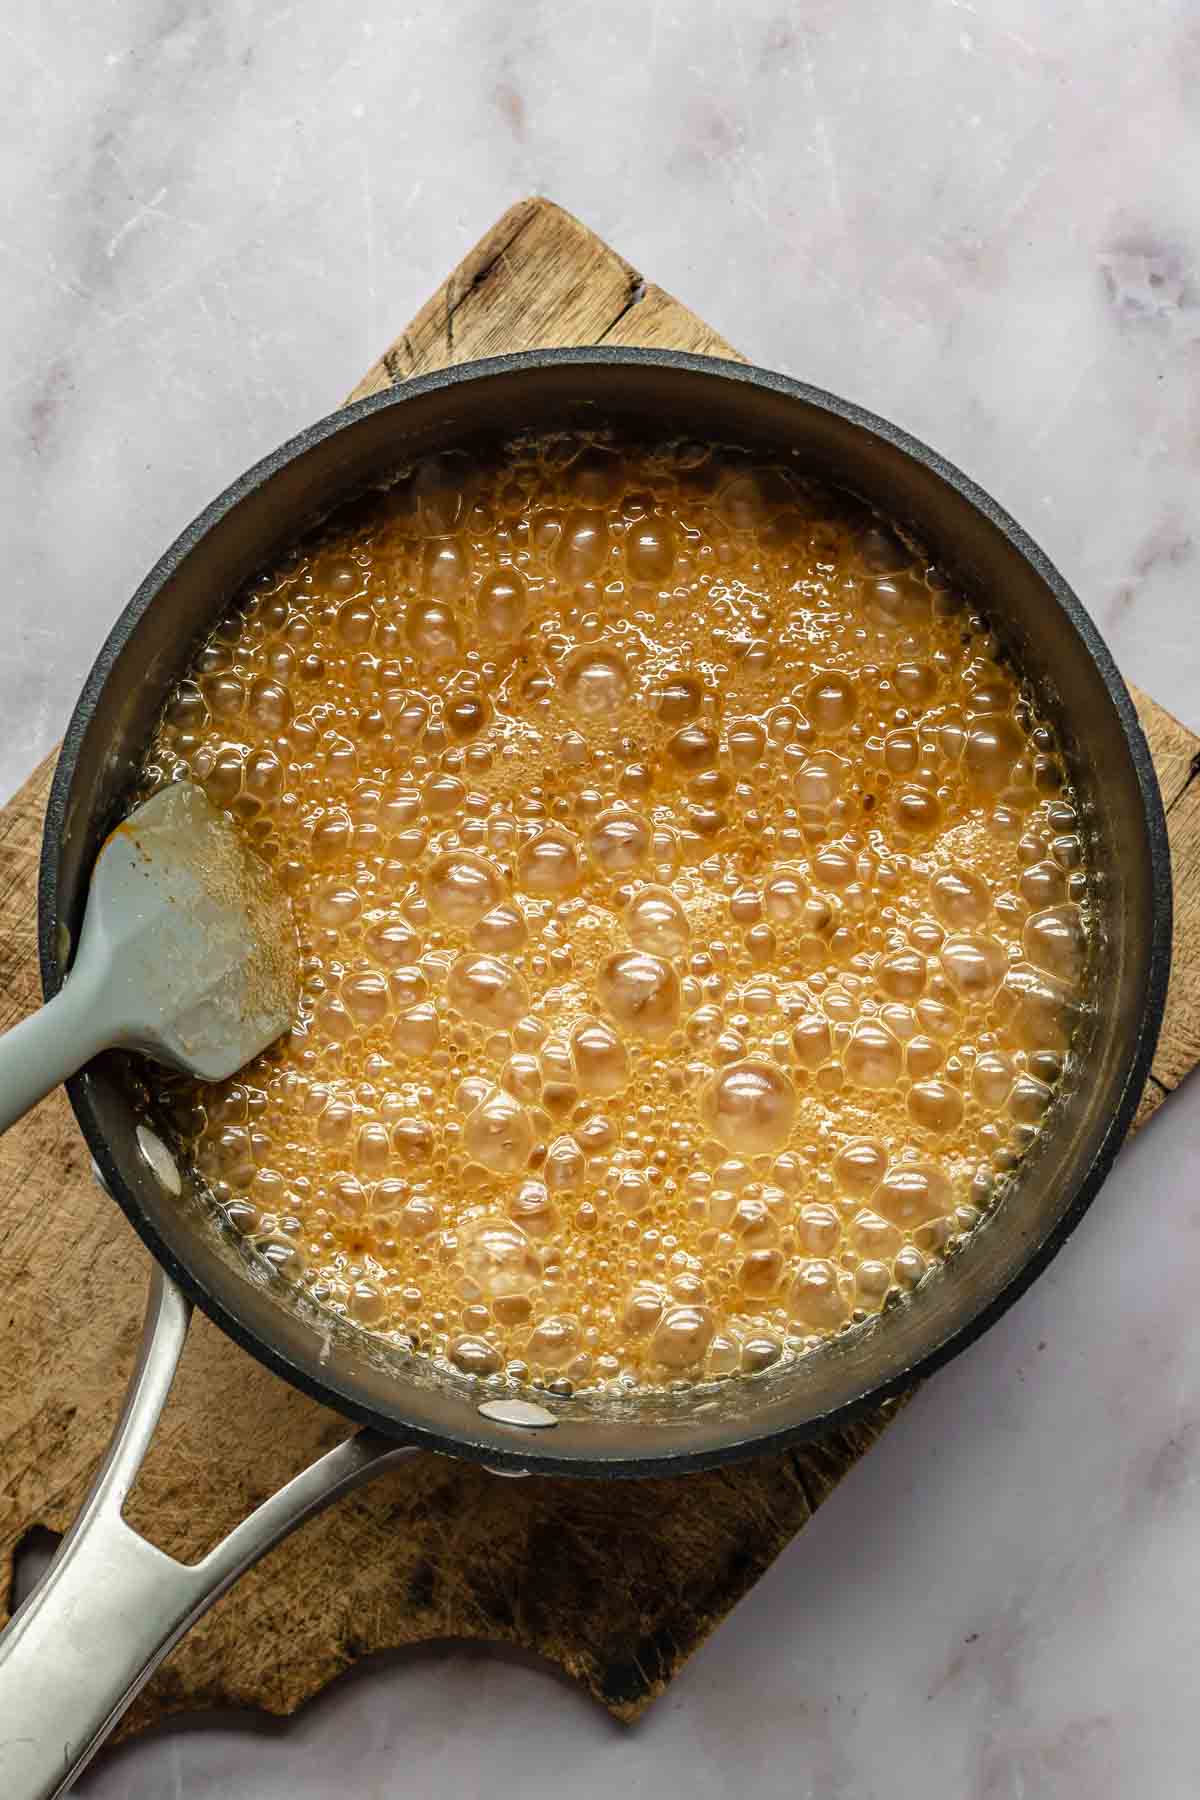 Bubbling caramel in a pot.